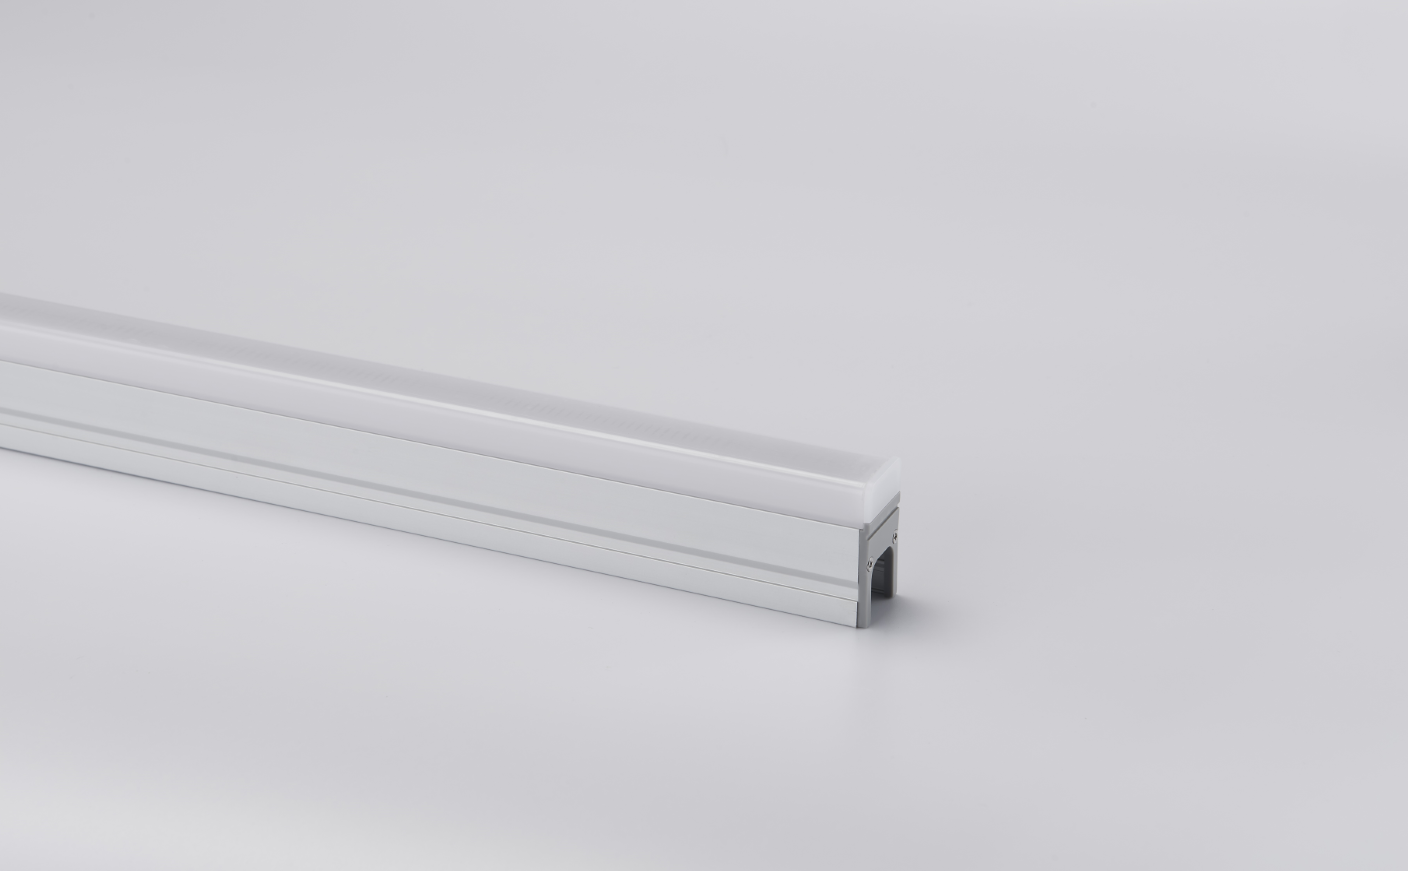 RH-C26 LED Luz lineal con luz LED flexible Luz de tira y perfil de extrusión de aluminio para luz de decoración